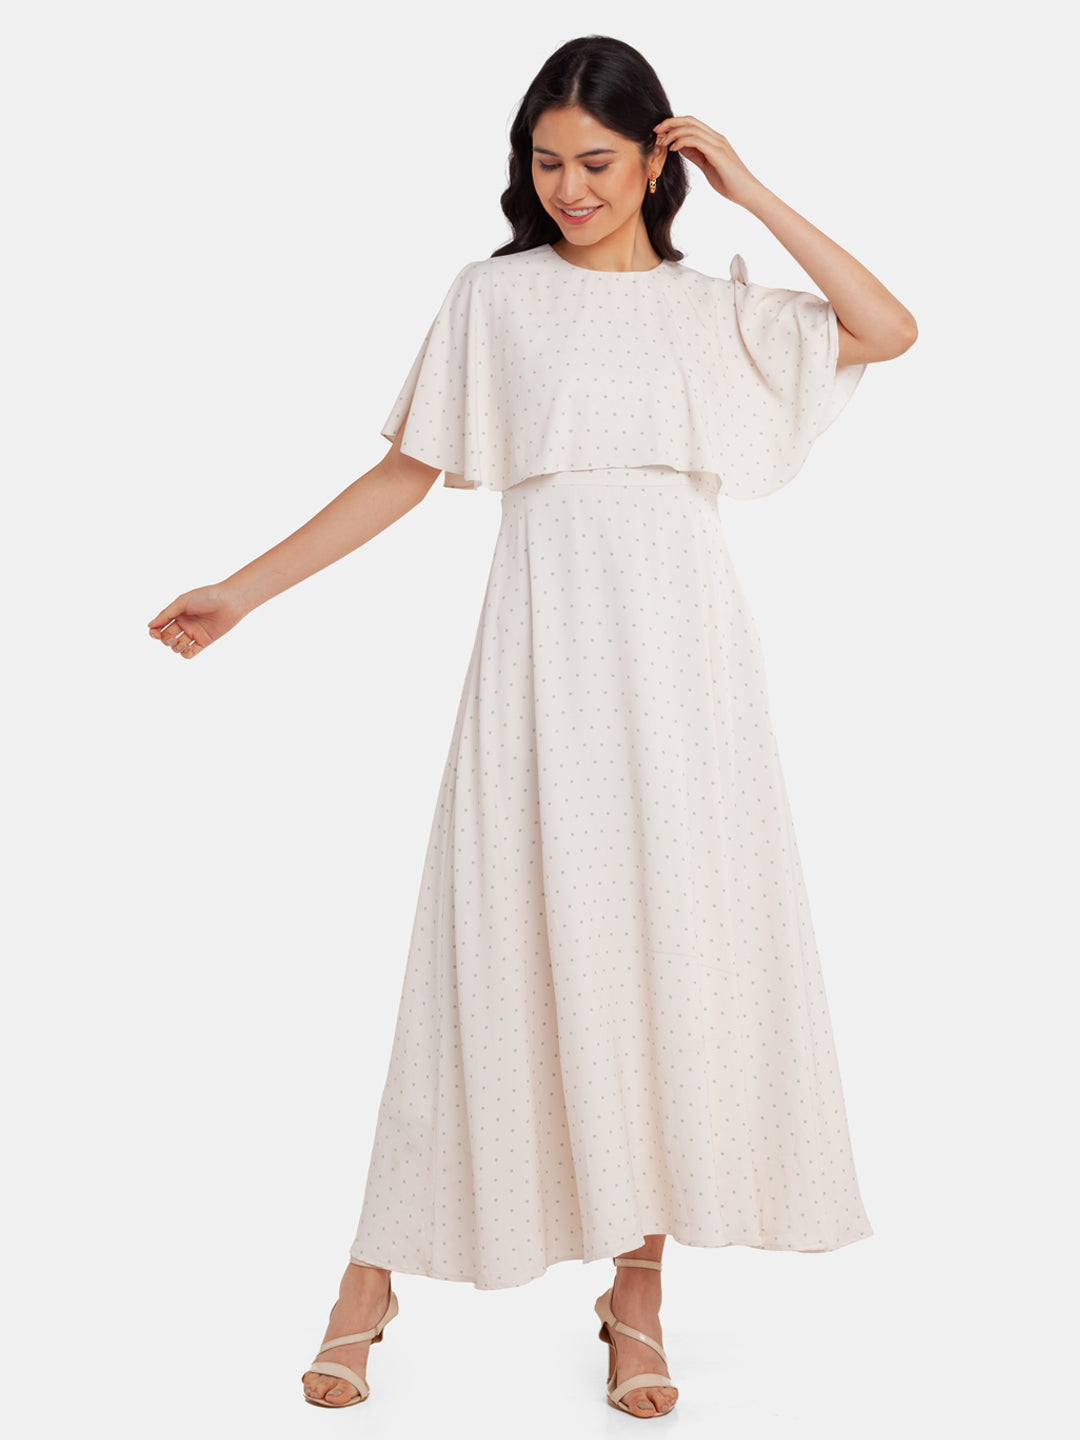 White Printed Cape Maxi Dress For Women